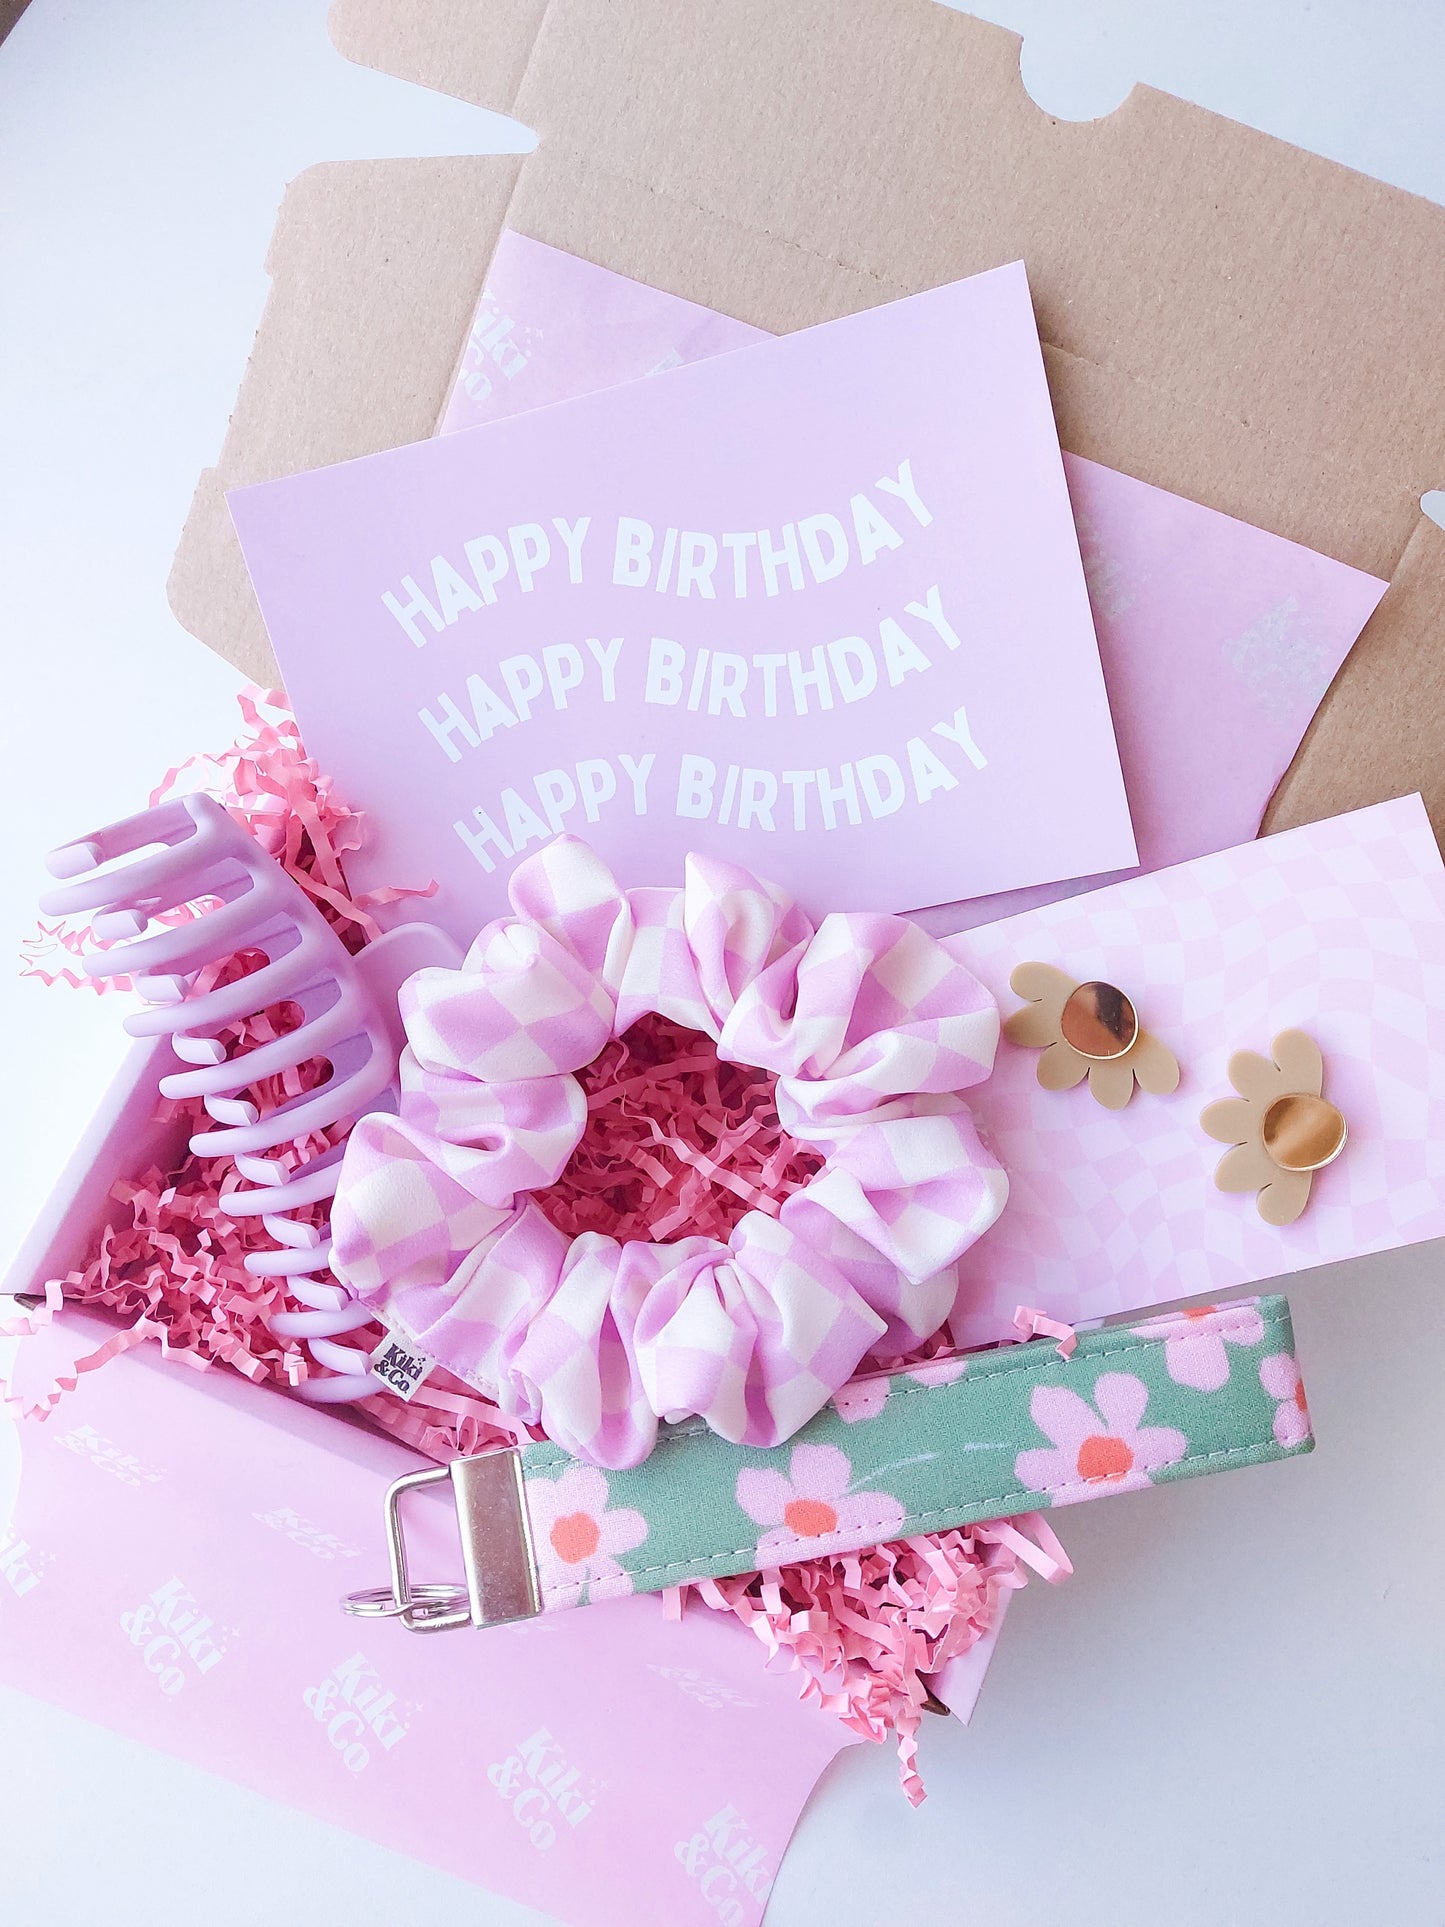 NEW Gift Box - The Happy Birthday Box